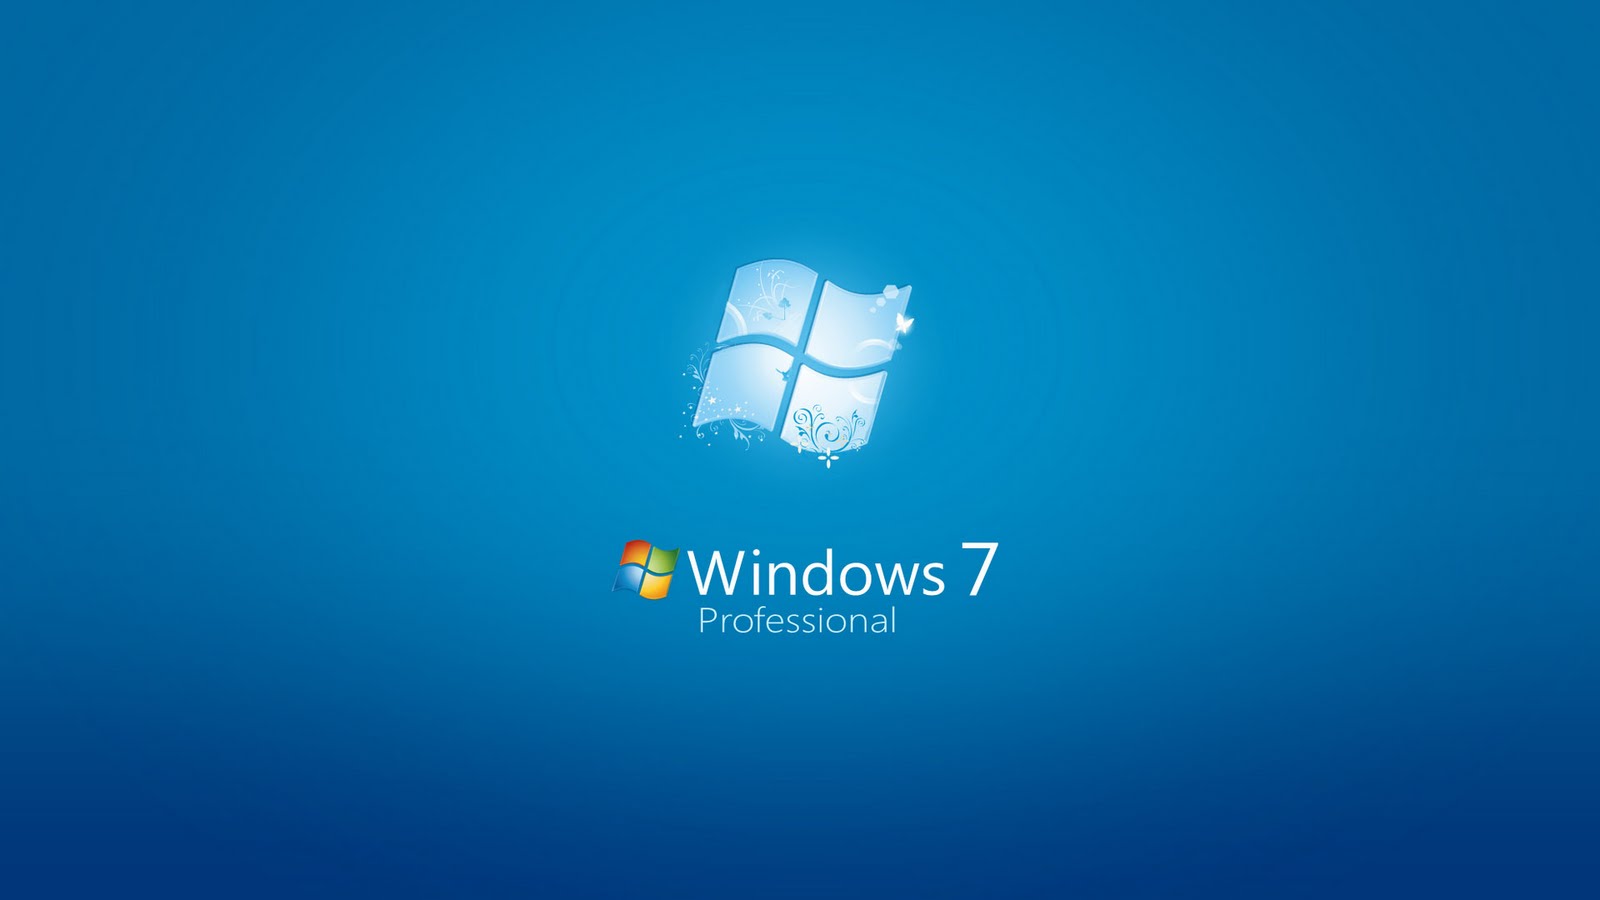 download windows 7 pro iso image